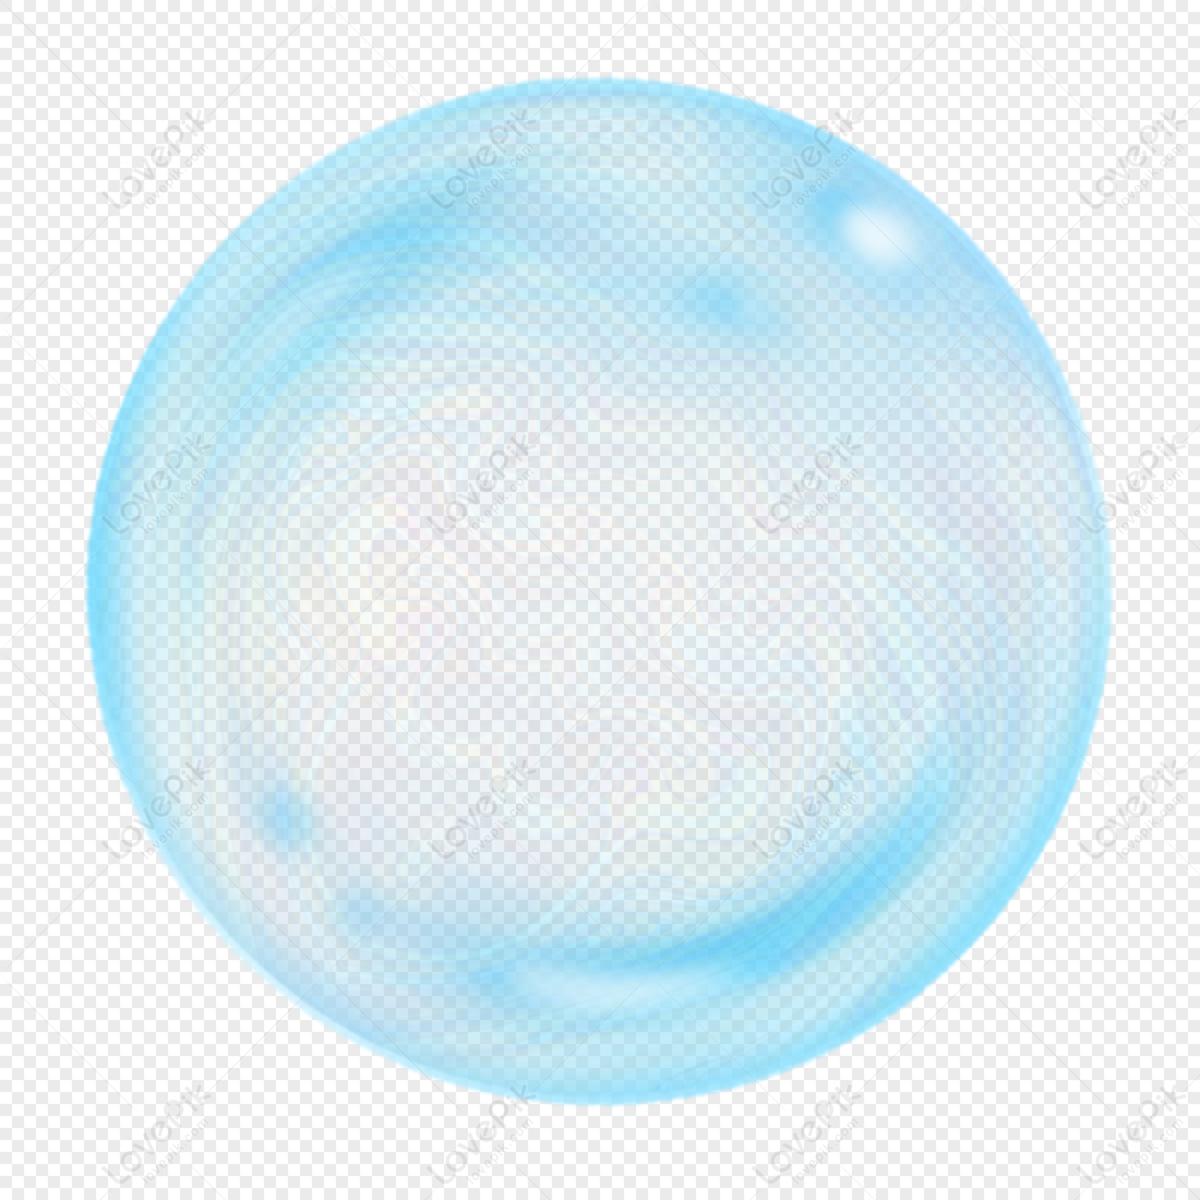 bubbles png hd